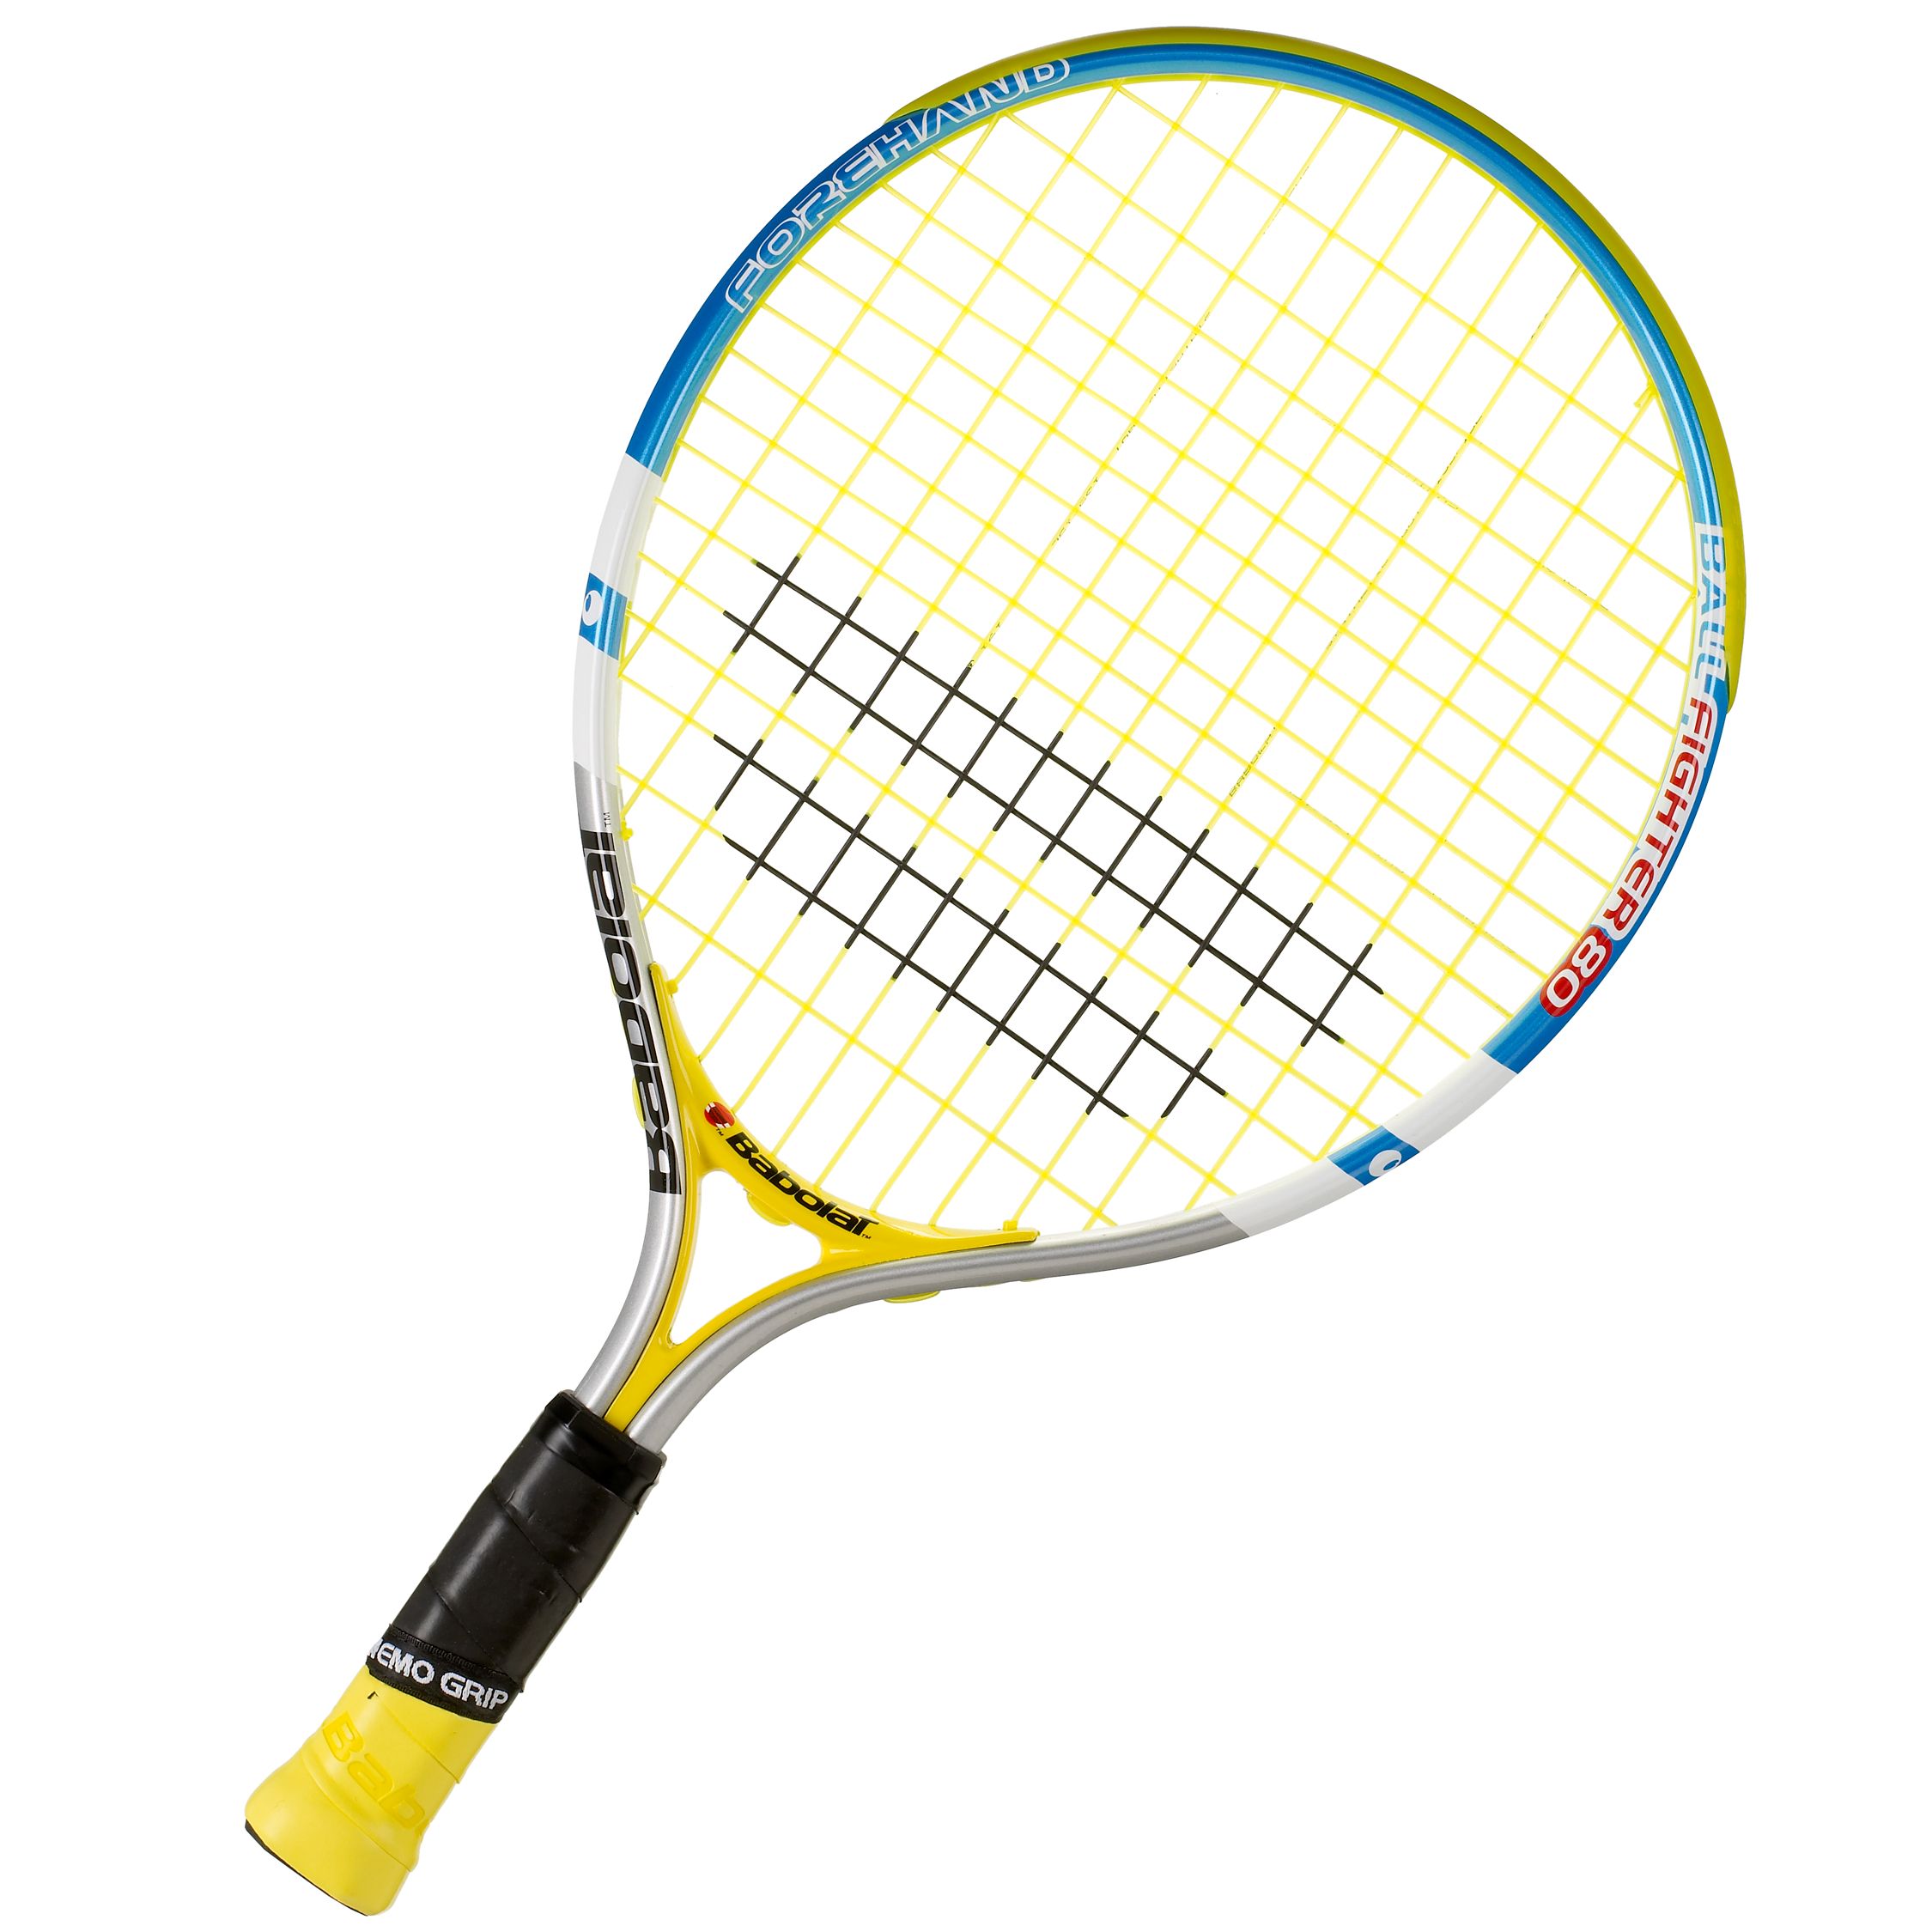 Babolat Ballfighter 80 Junior Tennis Racket, Age